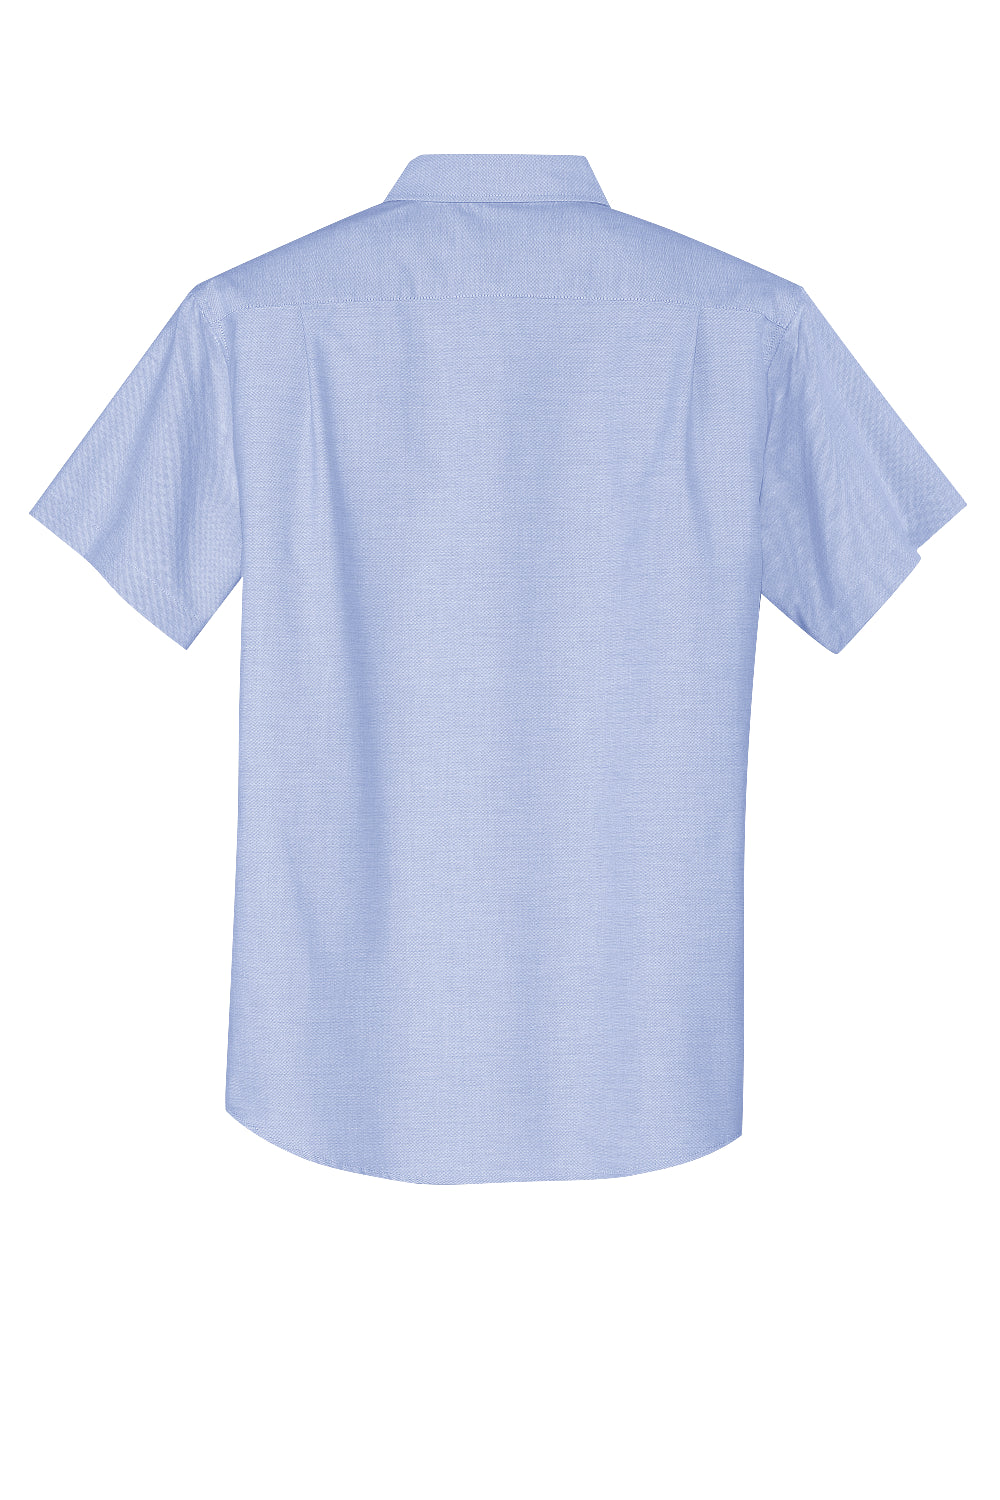 Port Authority S659 SuperPro Oxford Wrinkle Resistant Short Sleeve Button Down Shirt w/ Pocket Oxford Blue Flat Back